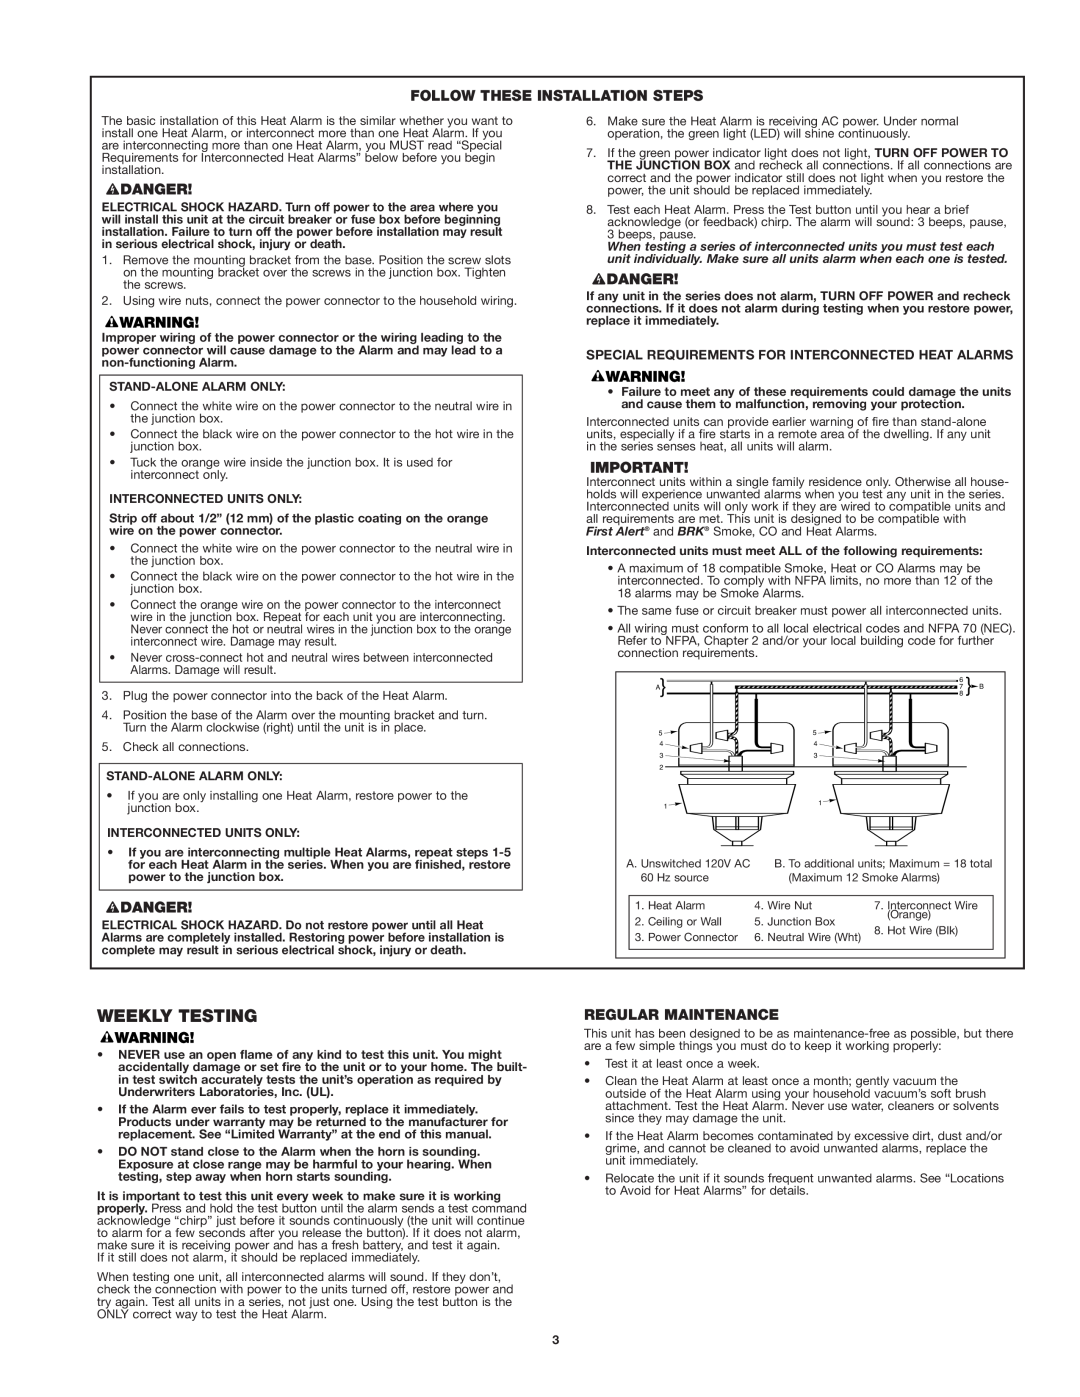 BRK electronic UL539 user manual Weekly Testing, Follow These Installation Steps, Regular Maintenance 